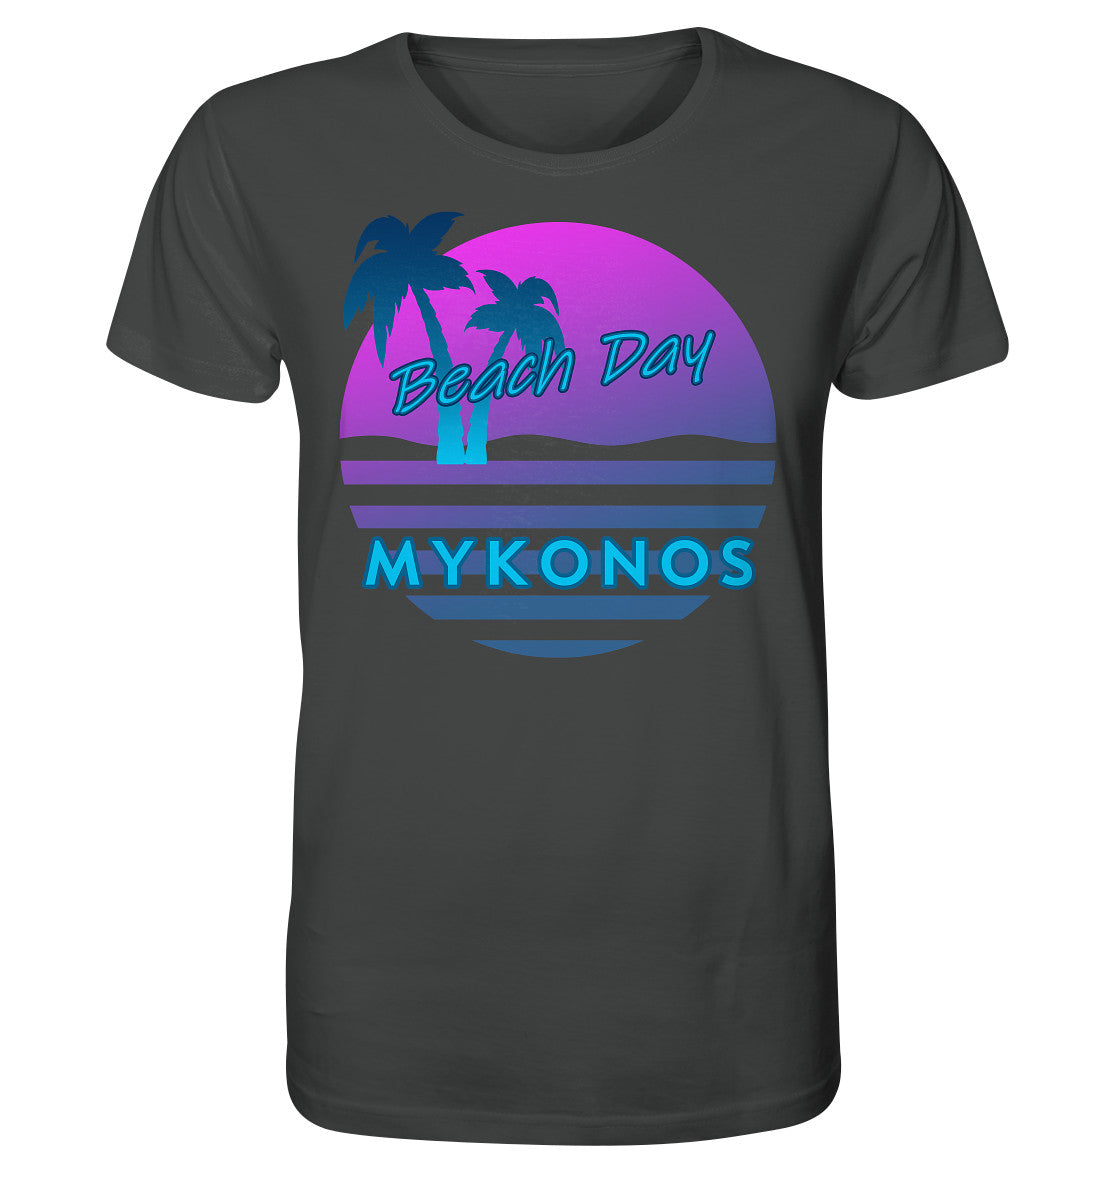 Beach Day Mykonos - Chemise bio